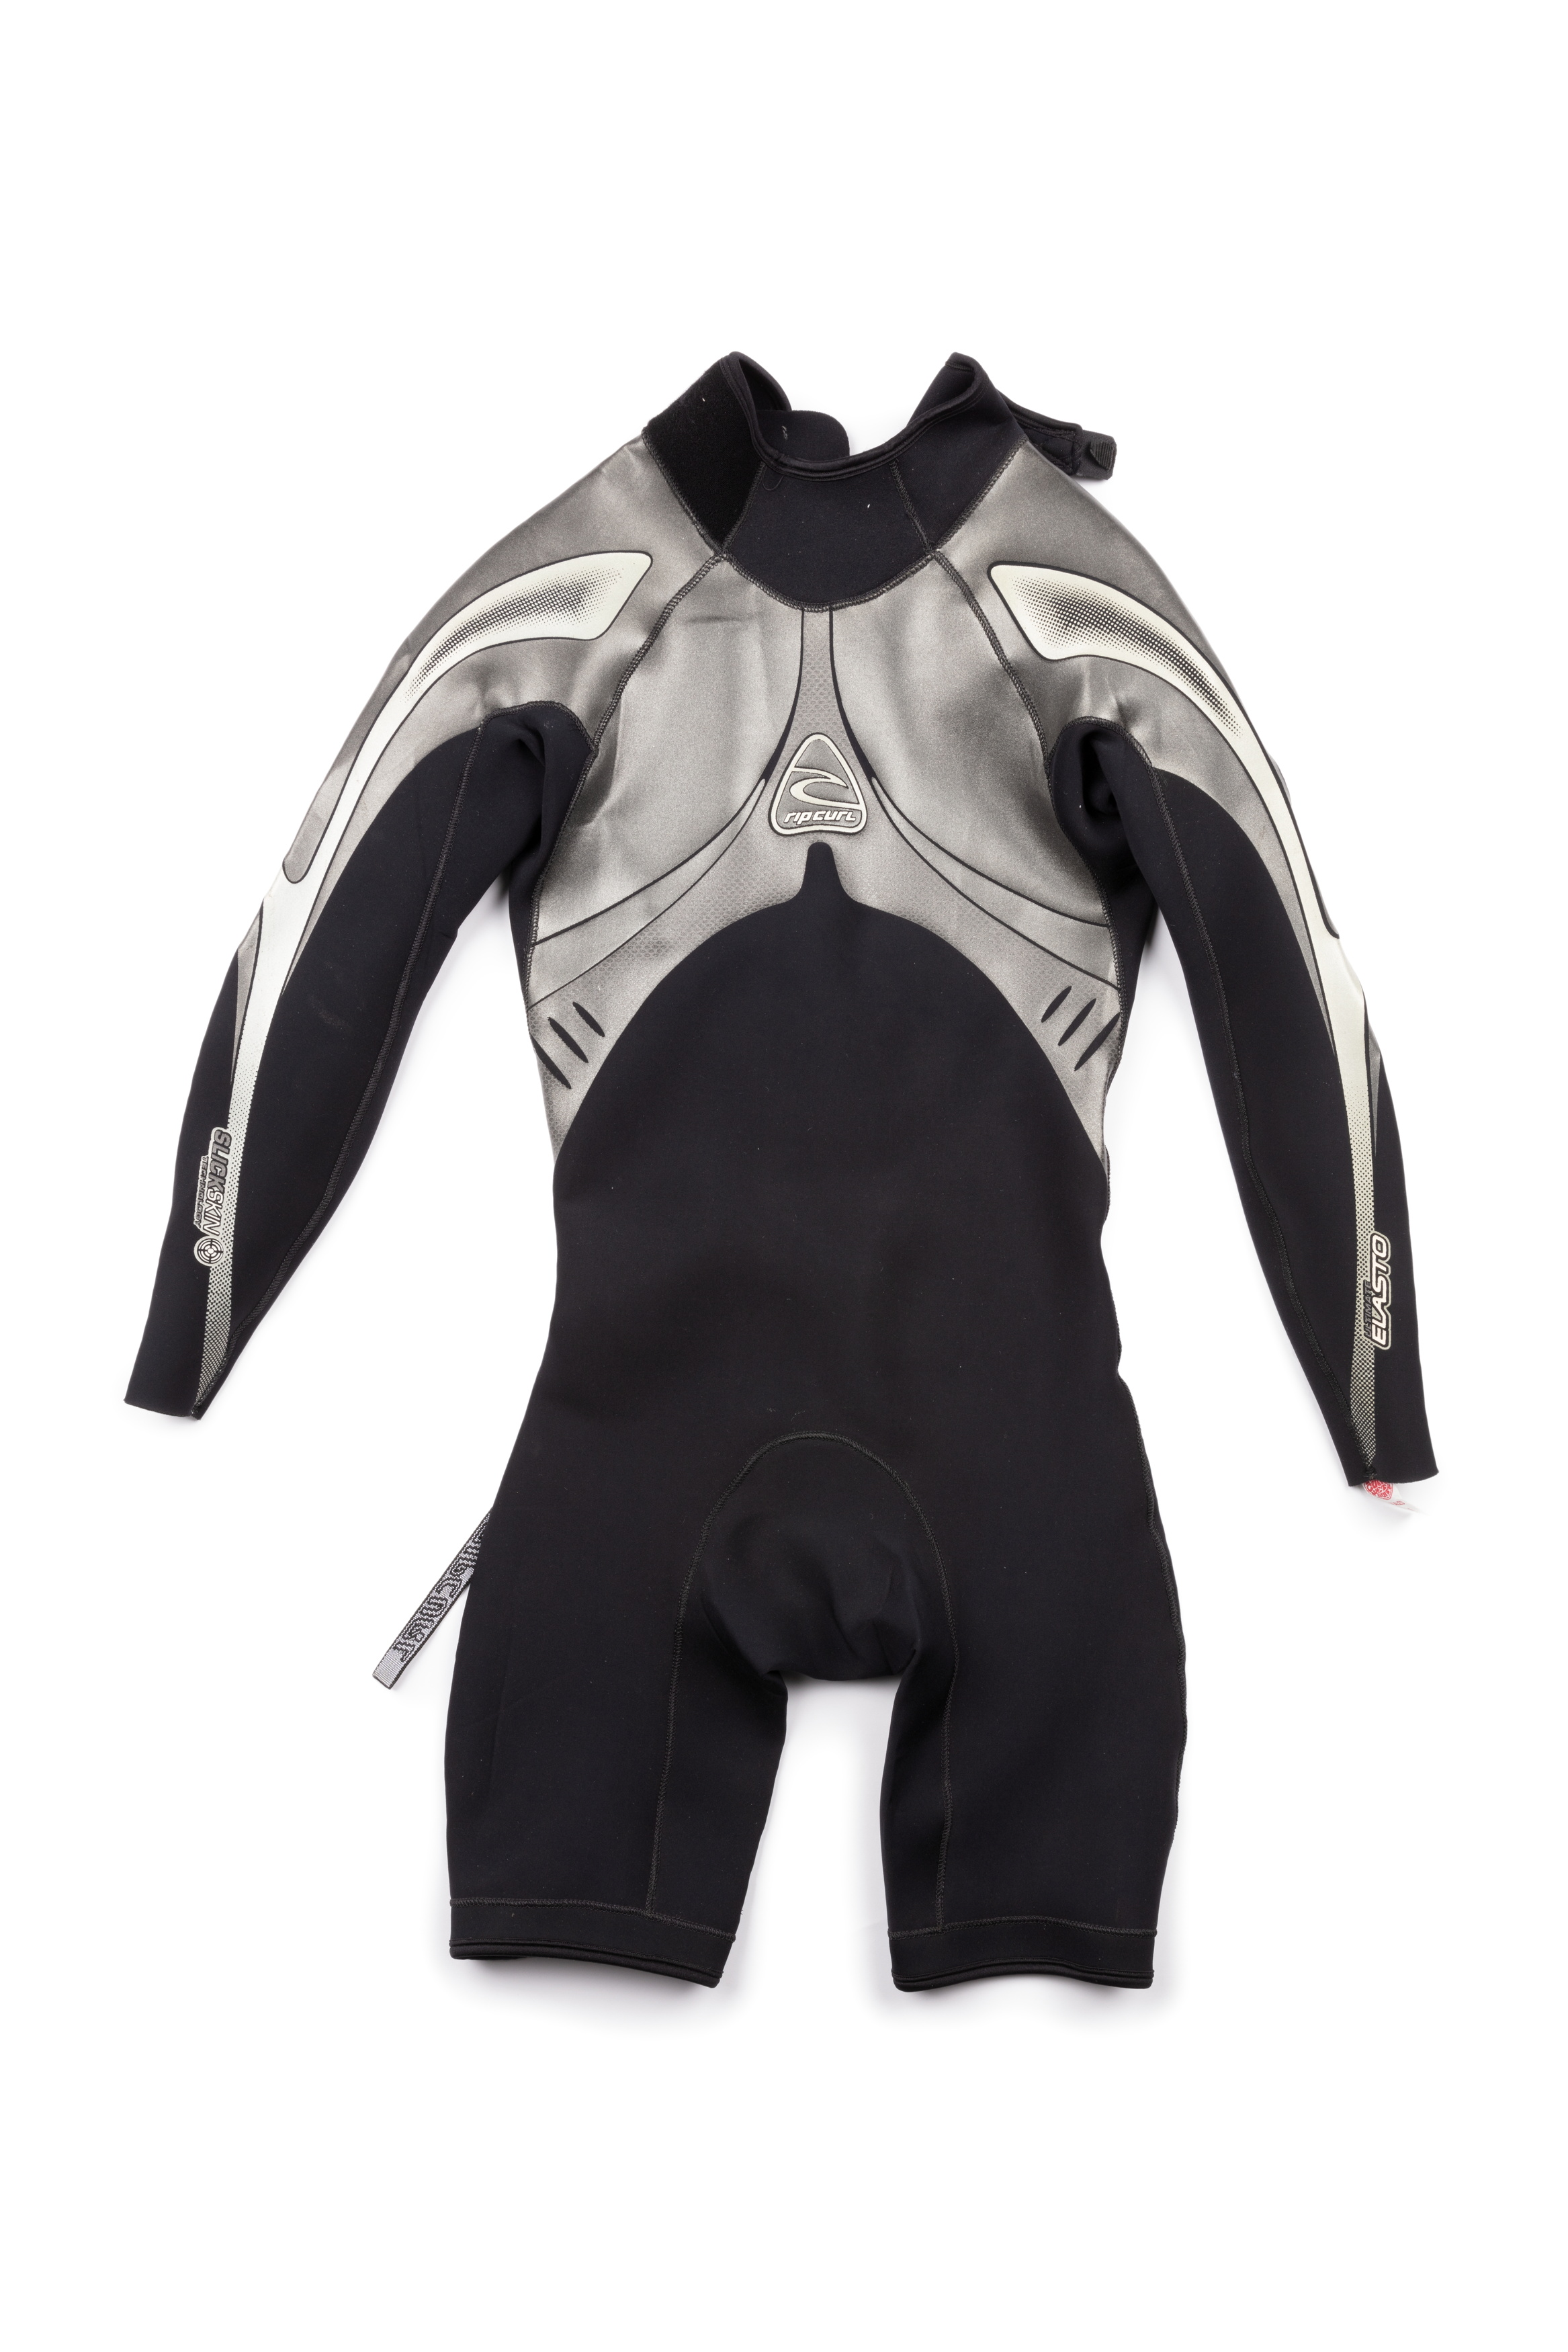 Rip Curl 'Ultimate Elasto' wetsuit